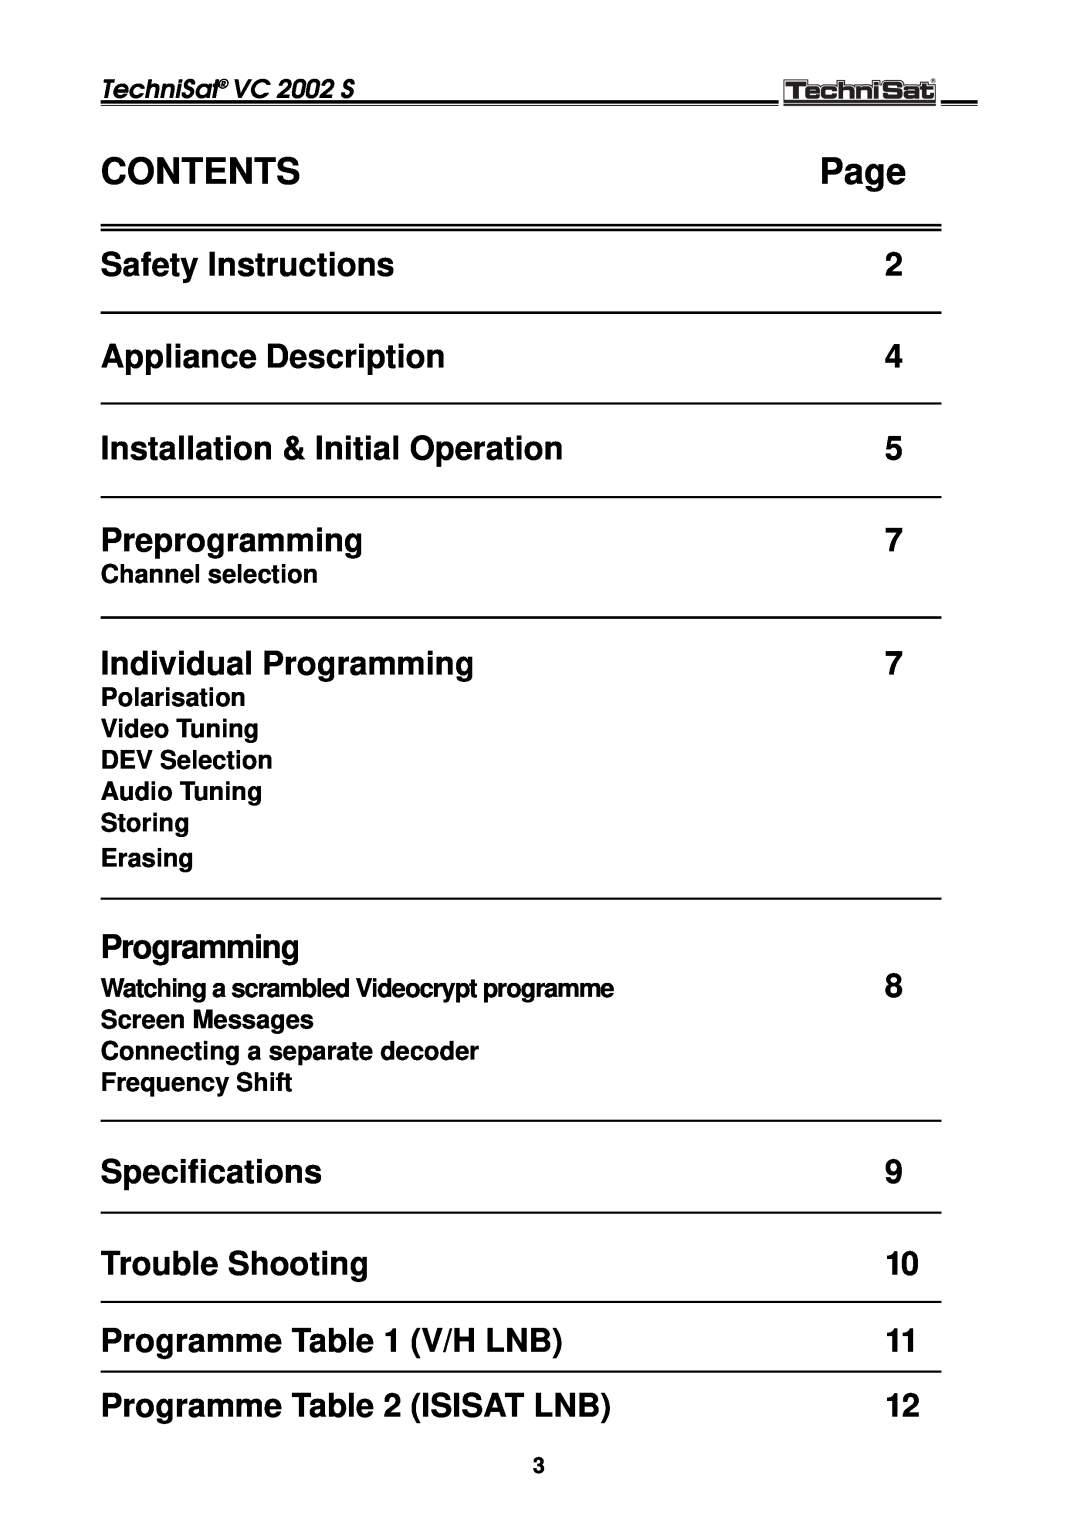 TechniSat VC 2002 S manual Contents, Page 